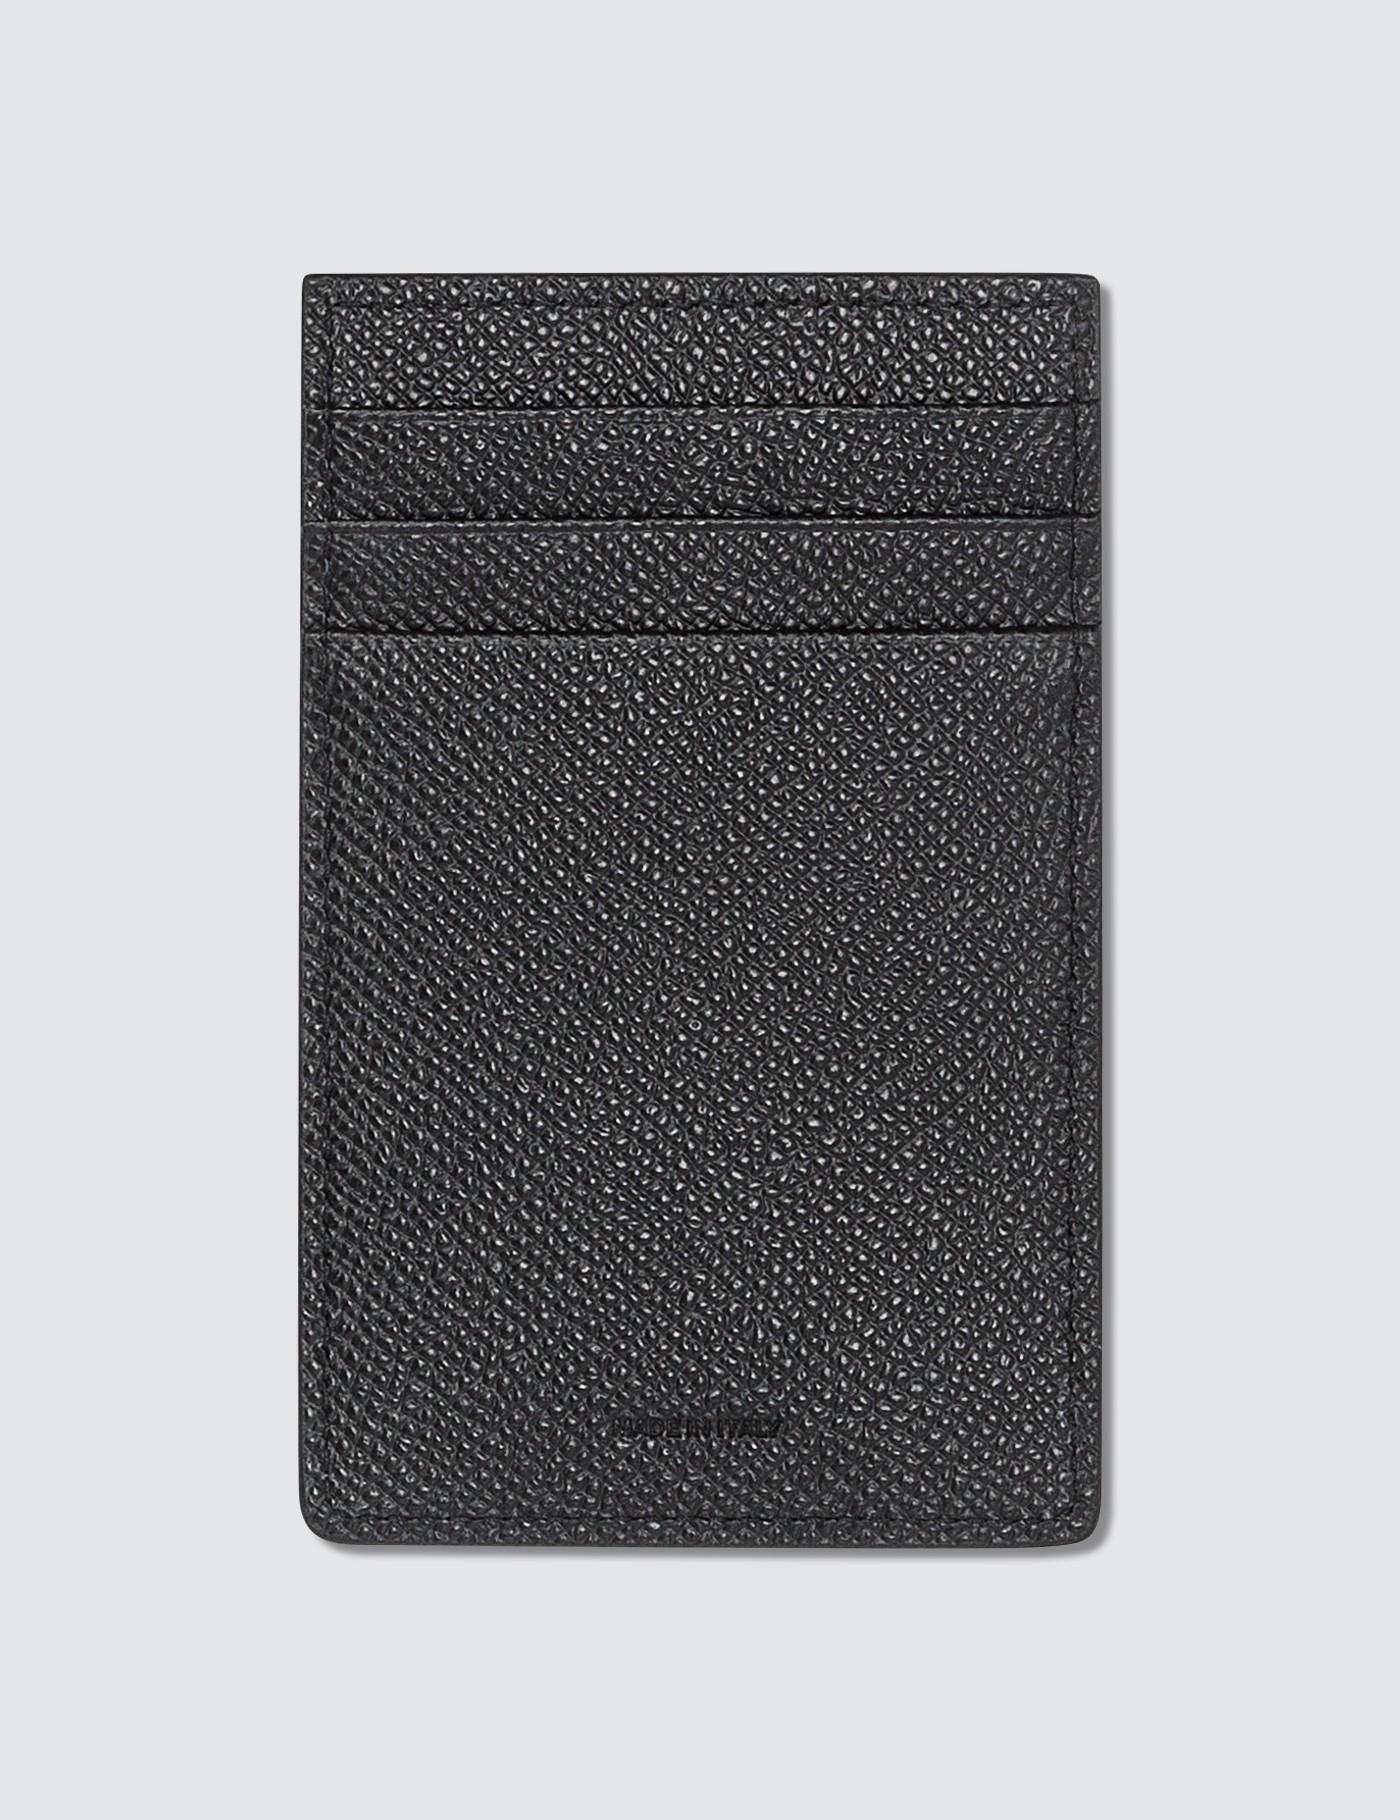 Burberry Business Grained Card Holder in Black for Men - Lyst